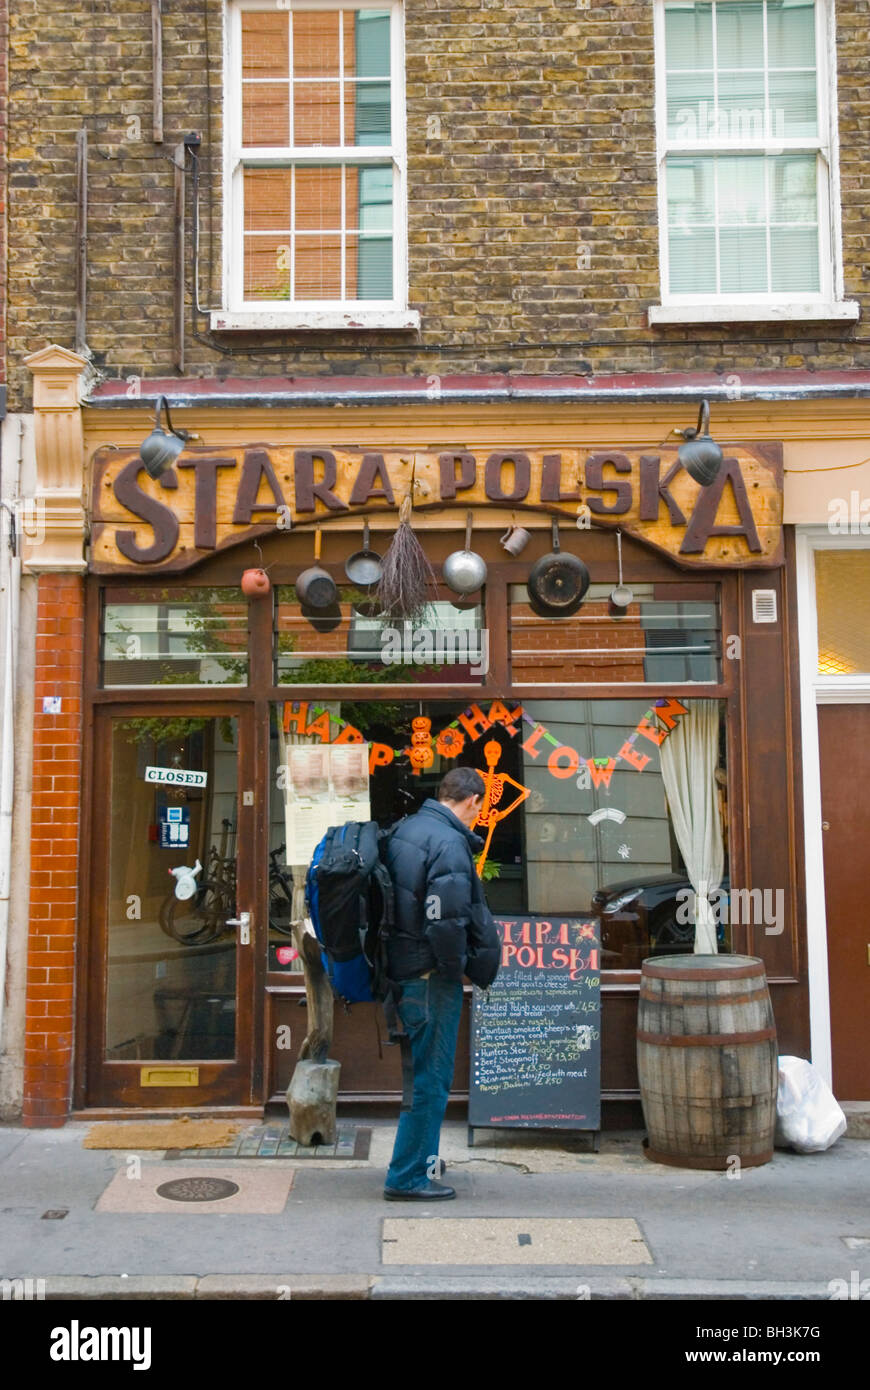 Stara Polska restaurant specialising in Polish cuisine Marylebone London England UK Europe Stock Photo